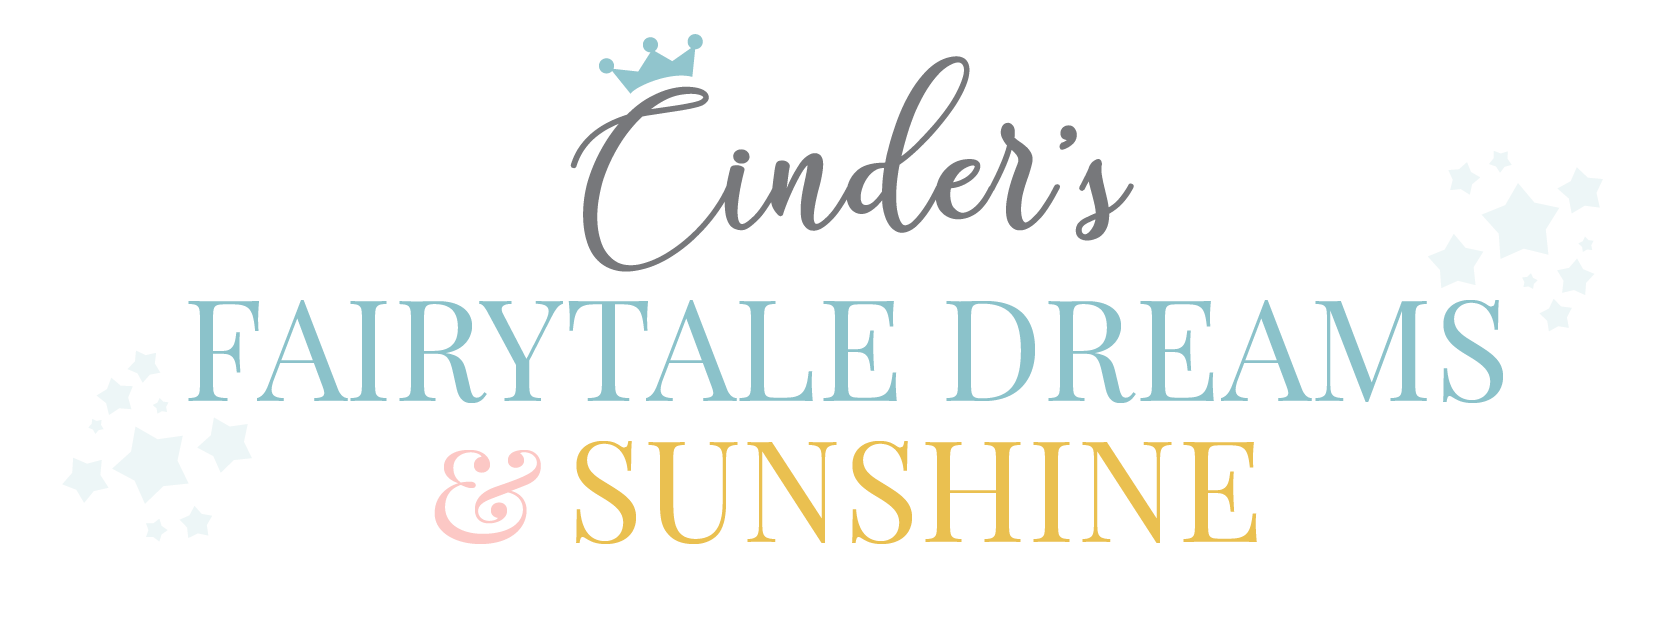 Cinders Fairytale Dreams & Sunshine – Lifestyle Blog